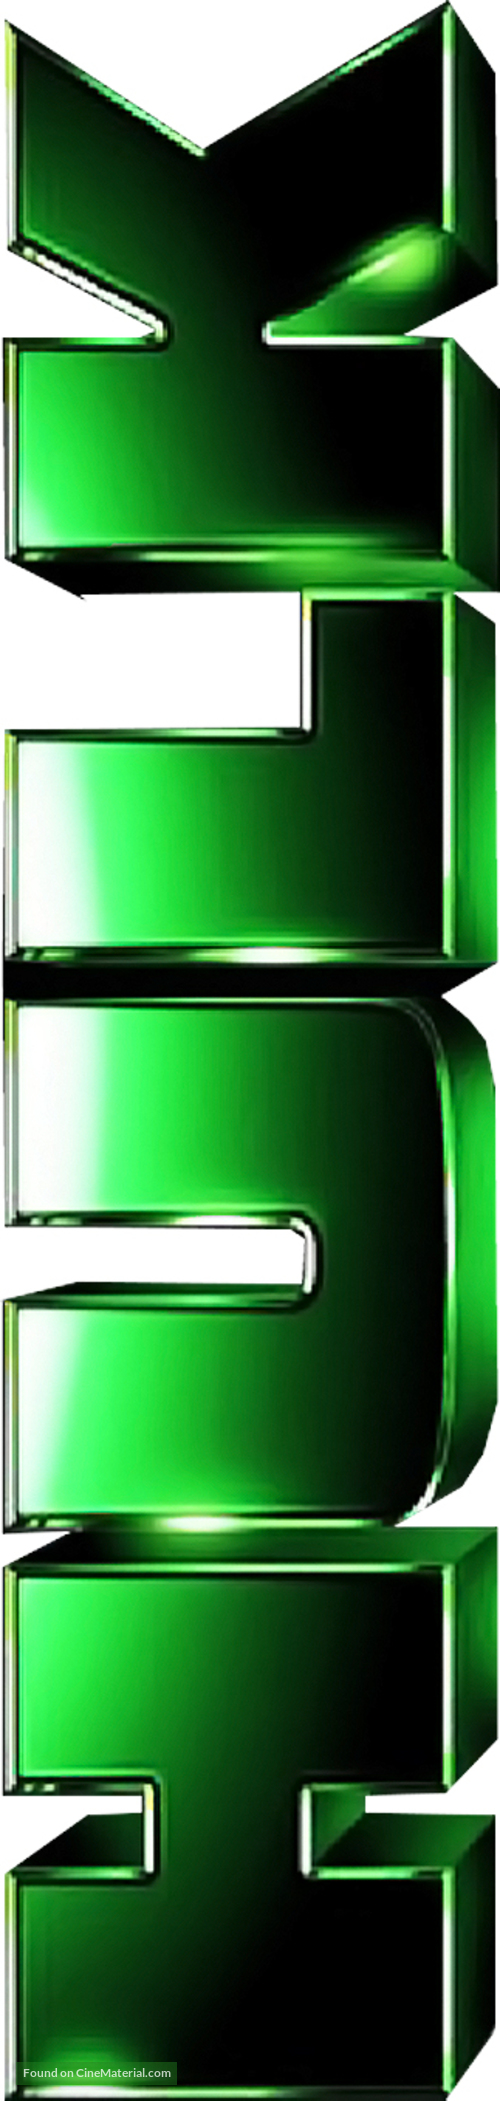 The Incredible Hulk (2008) - Logo by Car-gold on DeviantArt